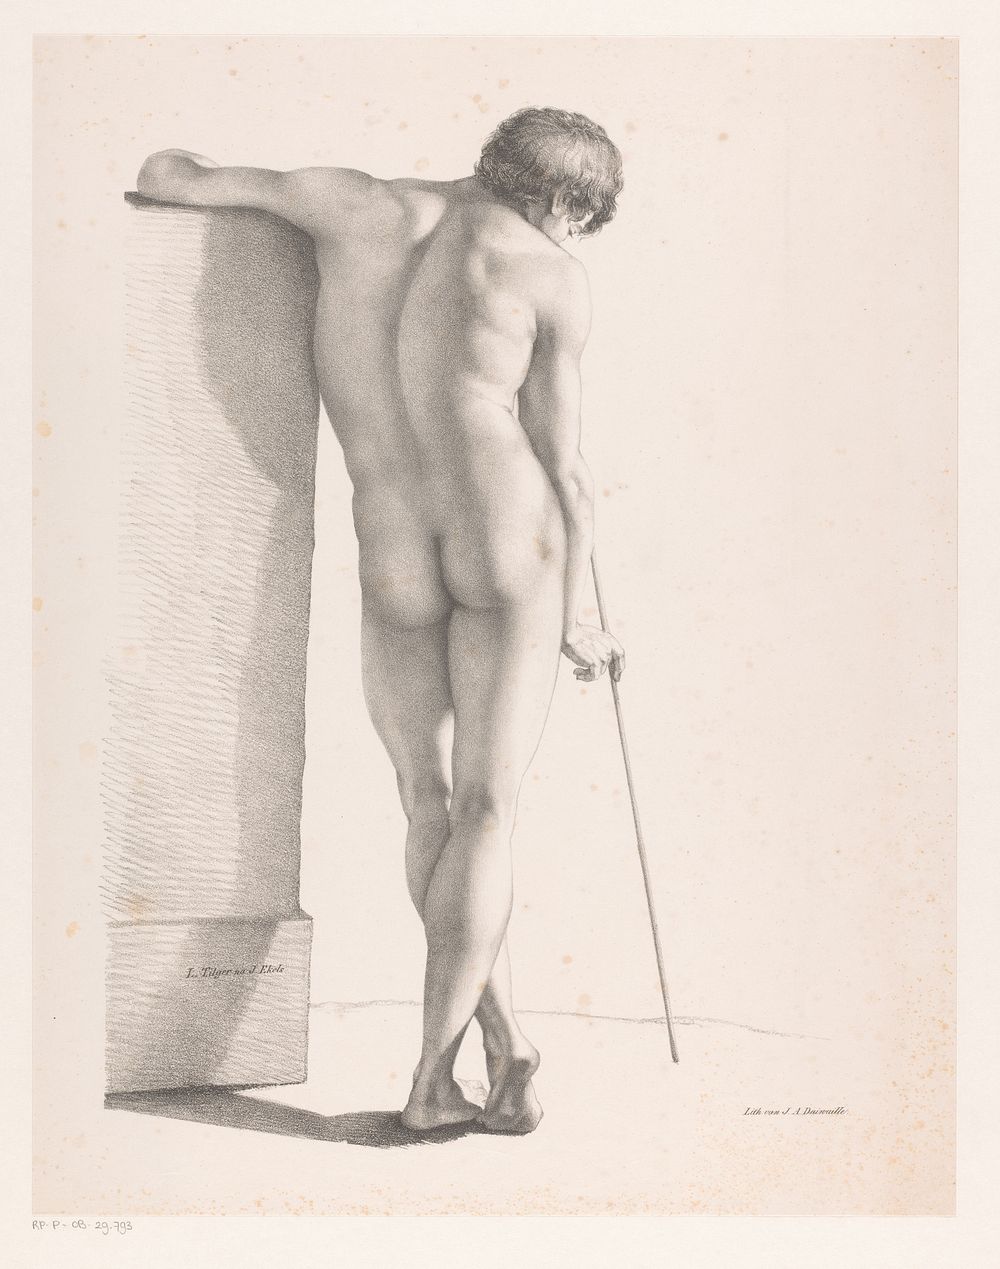 Mannelijk naakt (1828 - 1830) by L Tilger, Jan Ekels II and Jean Augustin Daiwaille